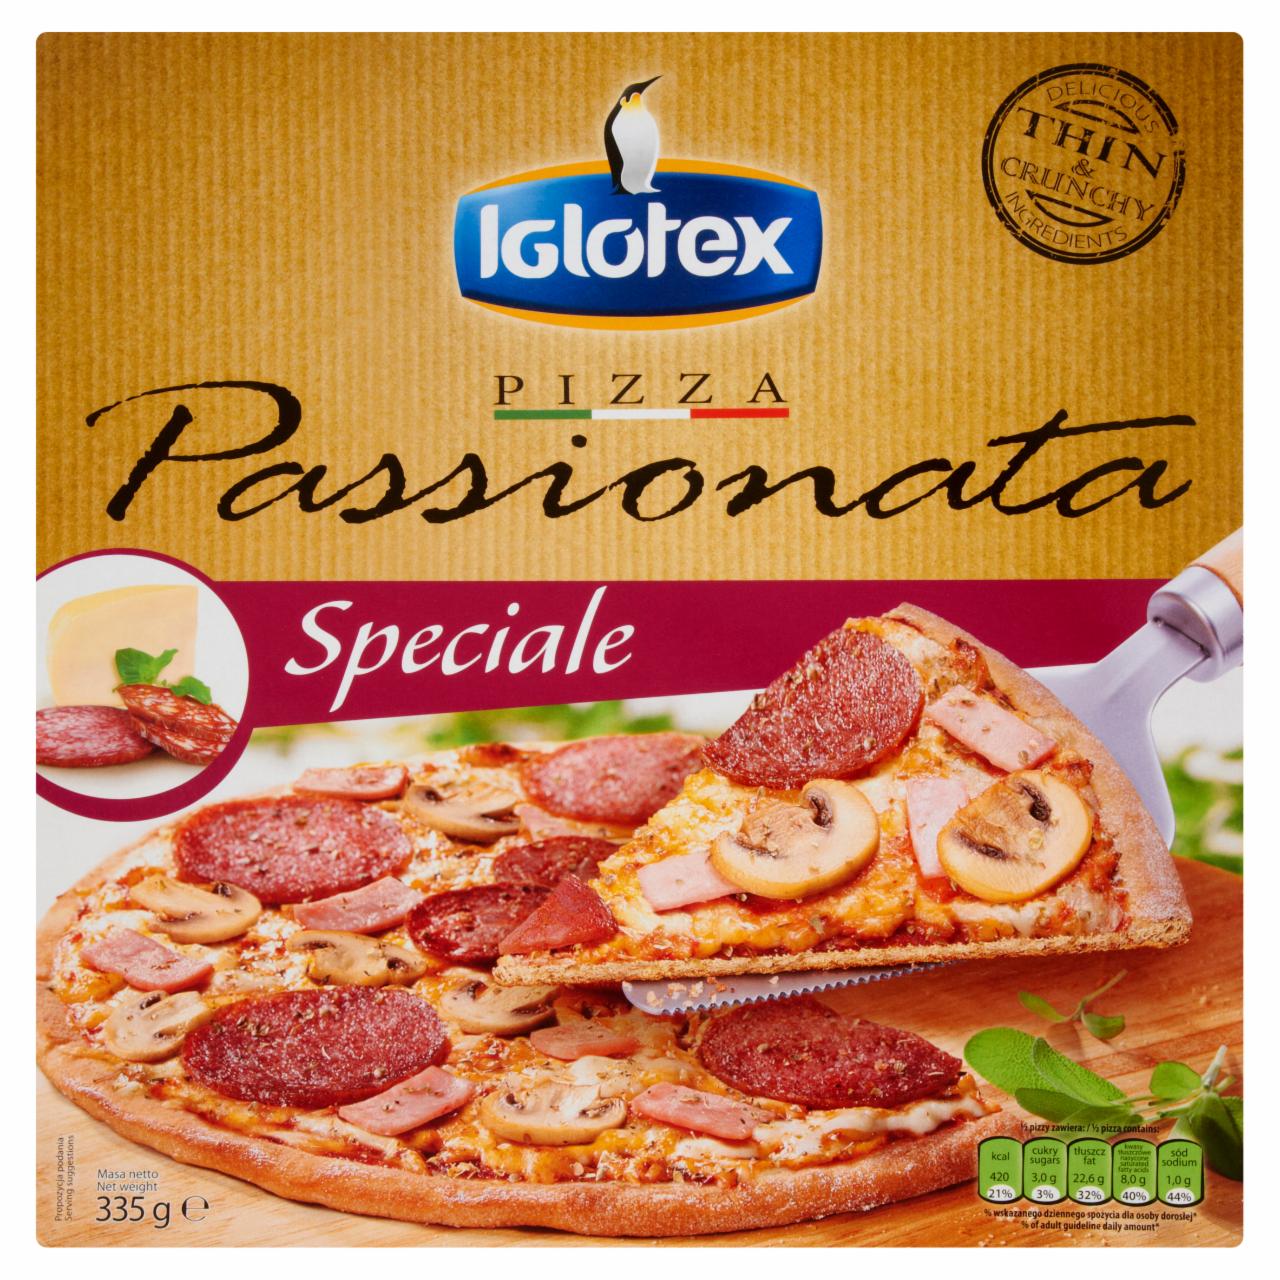 Zdjęcia - Iglotex Passionata Pizza Speciale 335 g